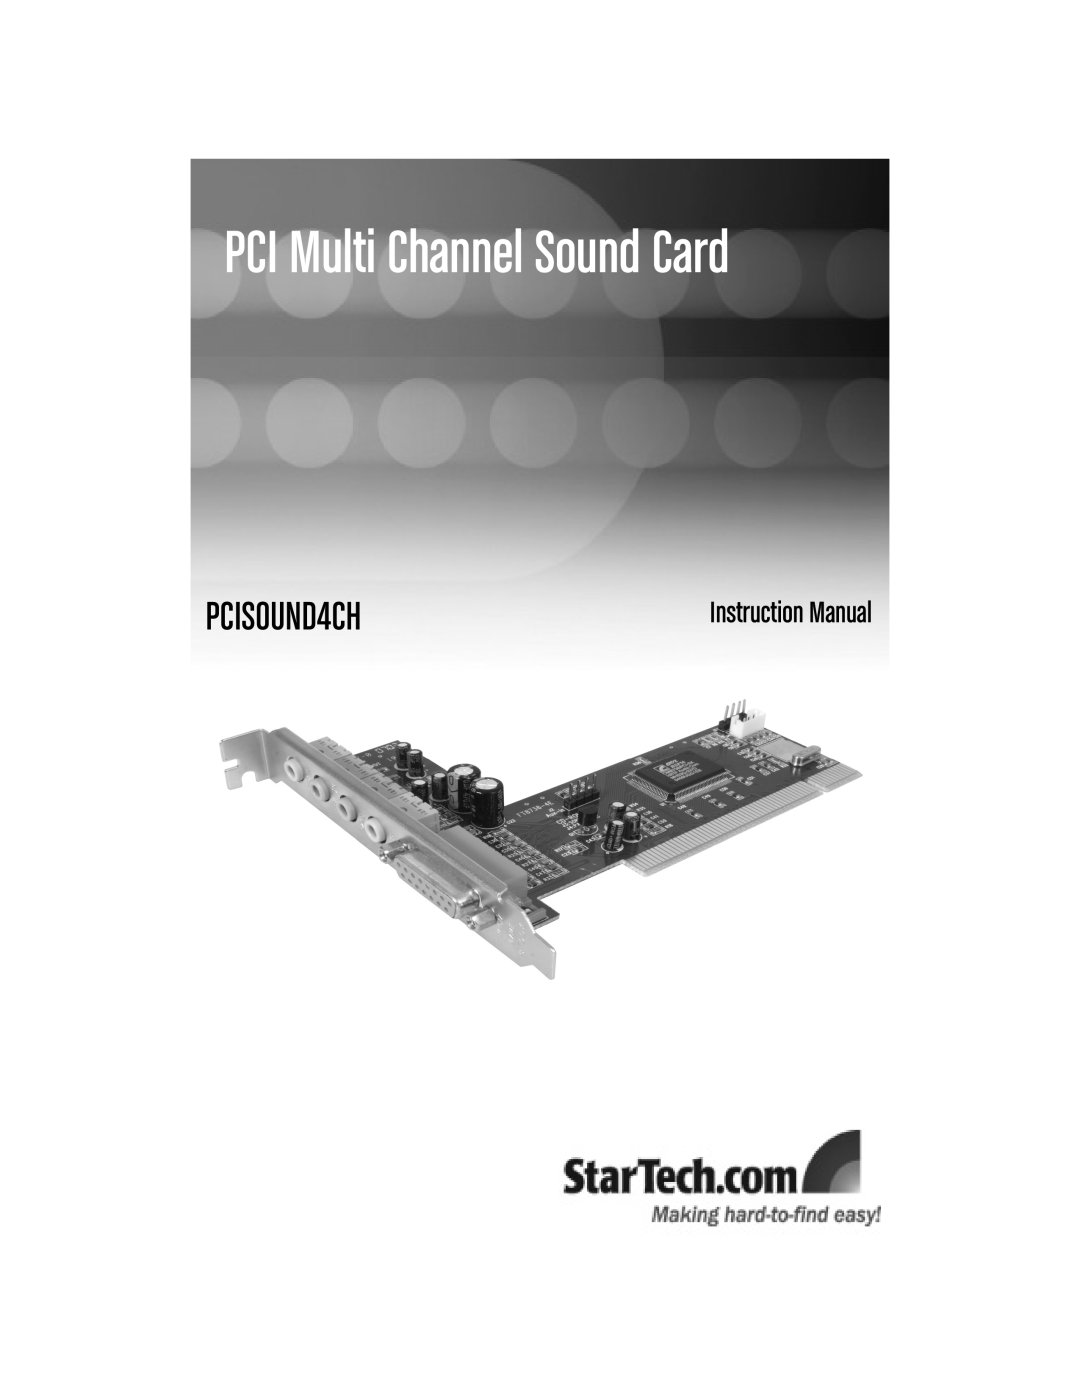 StarTech.com PCISOUND4CH instruction manual PCI Multi Channel Sound Card 